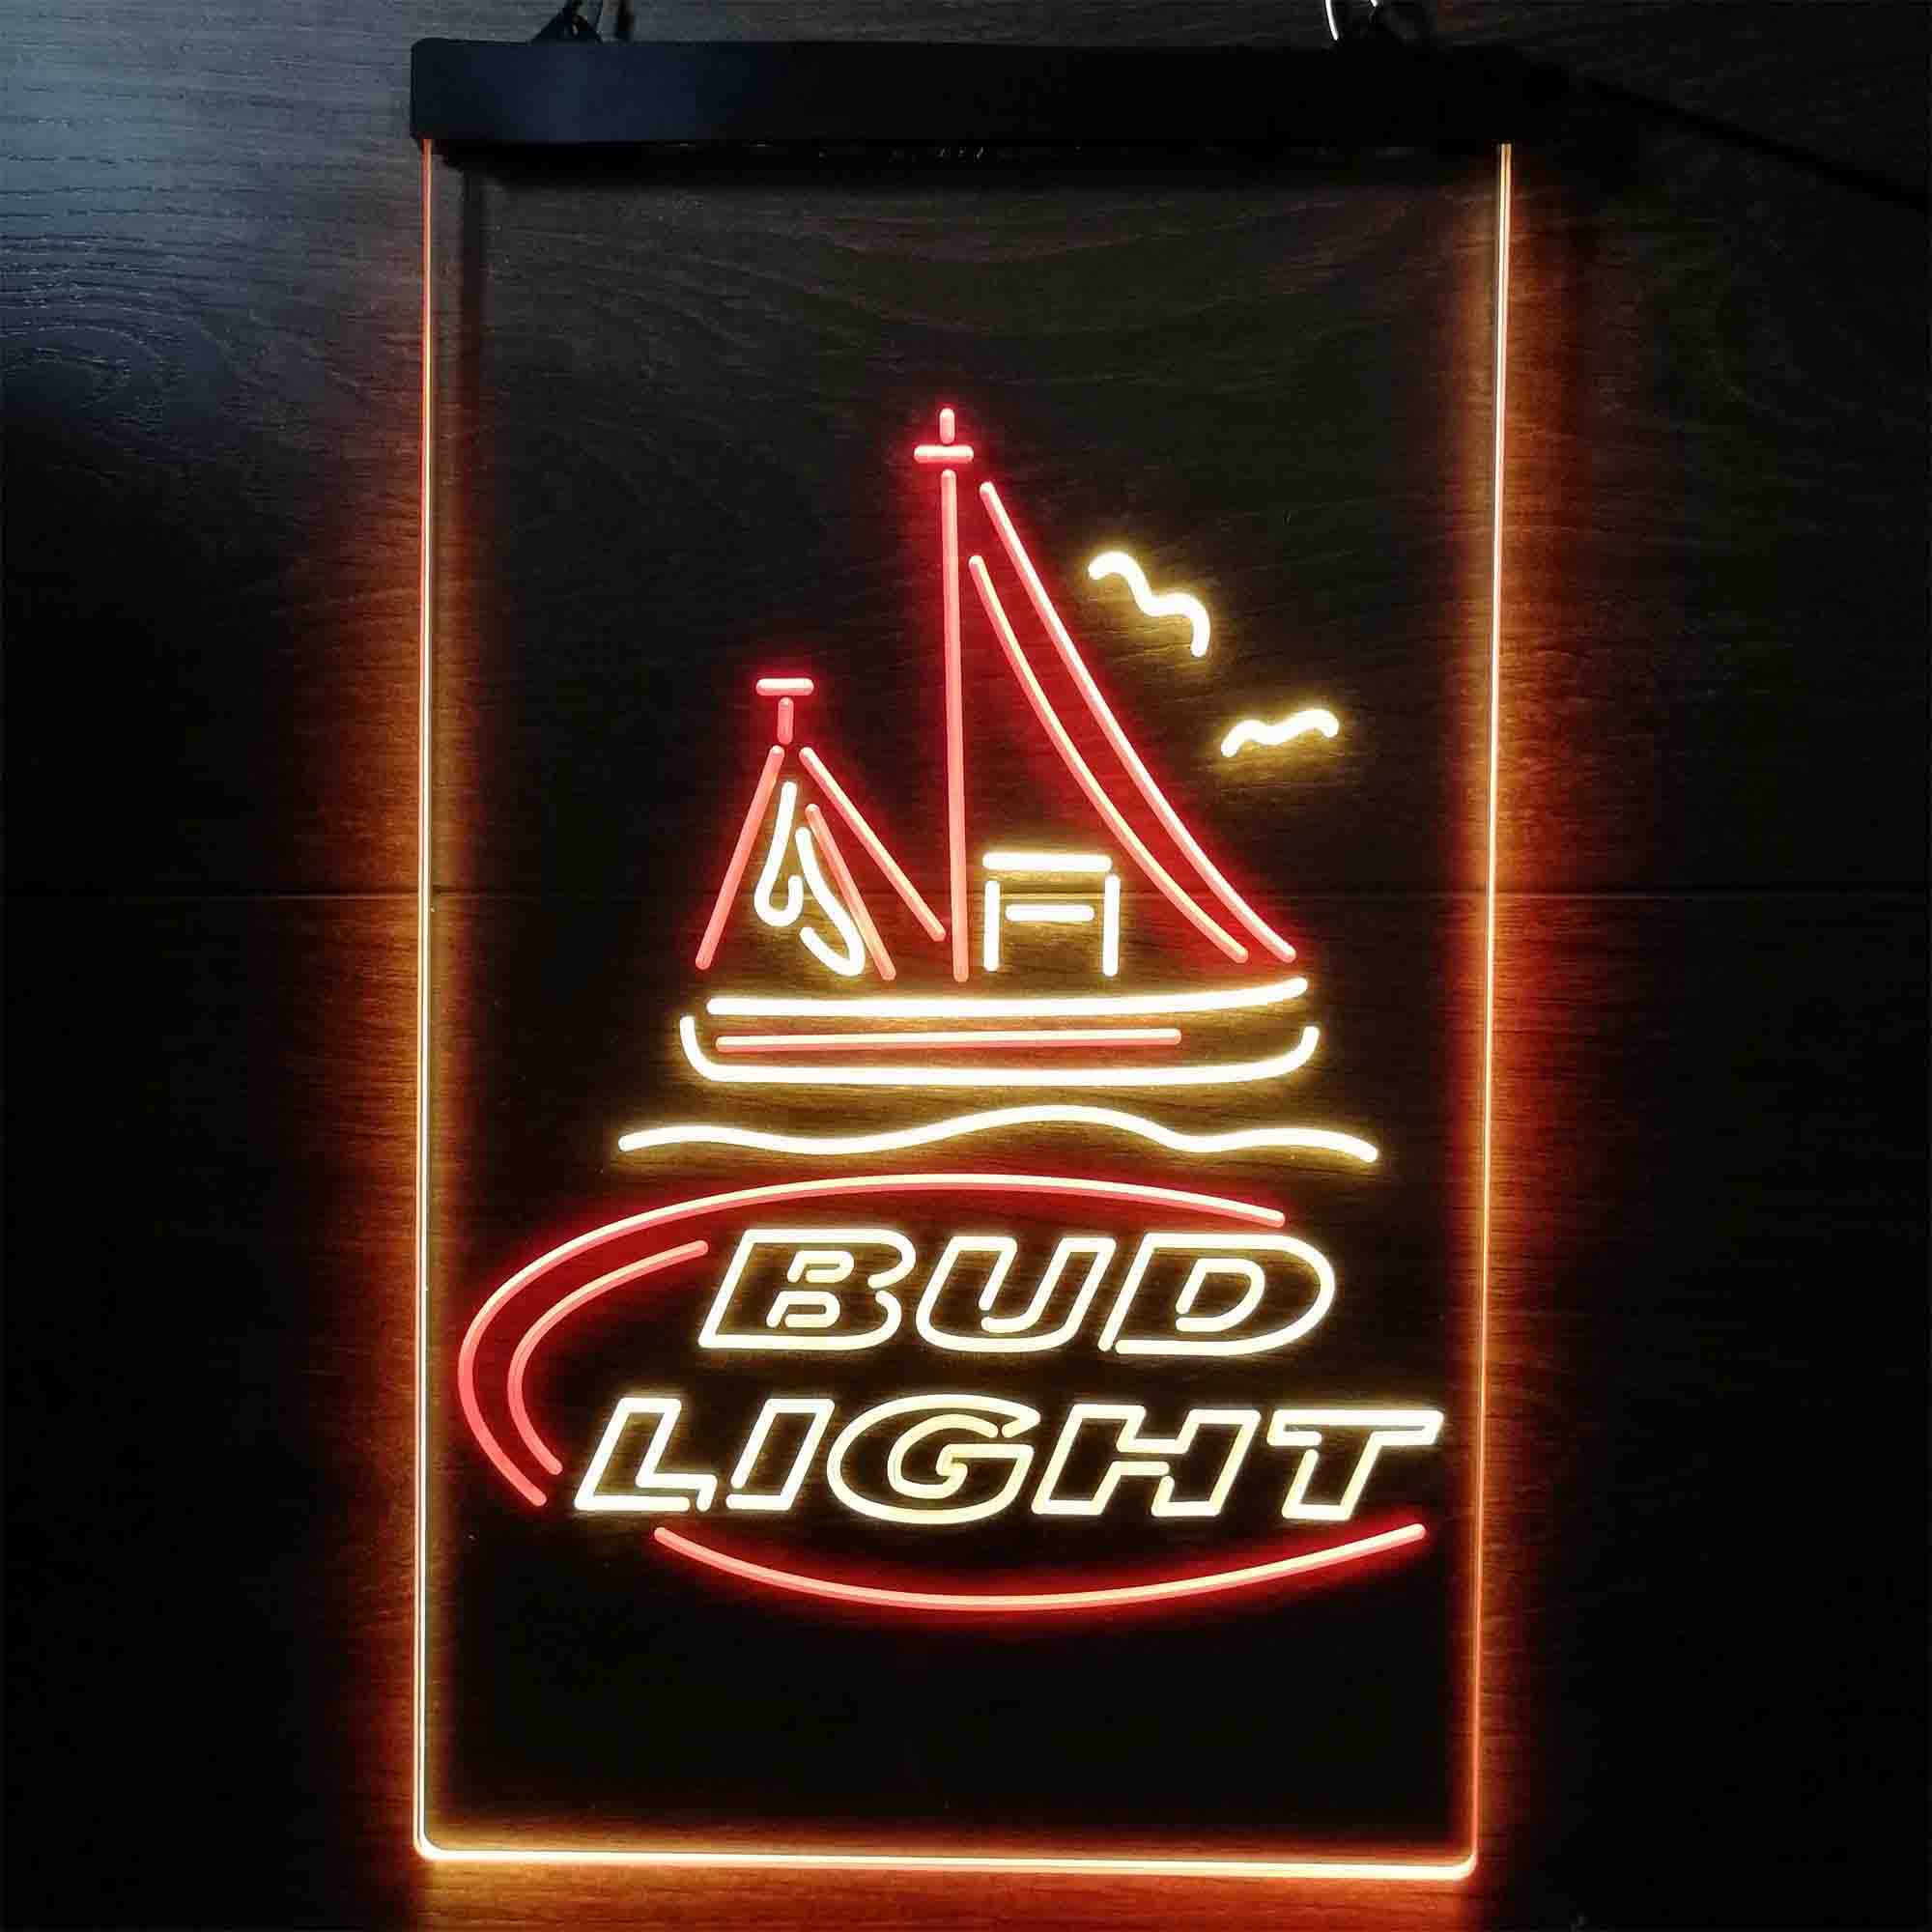 Bud Light Sail Boat Neon-Like LED Sign - ProLedSign